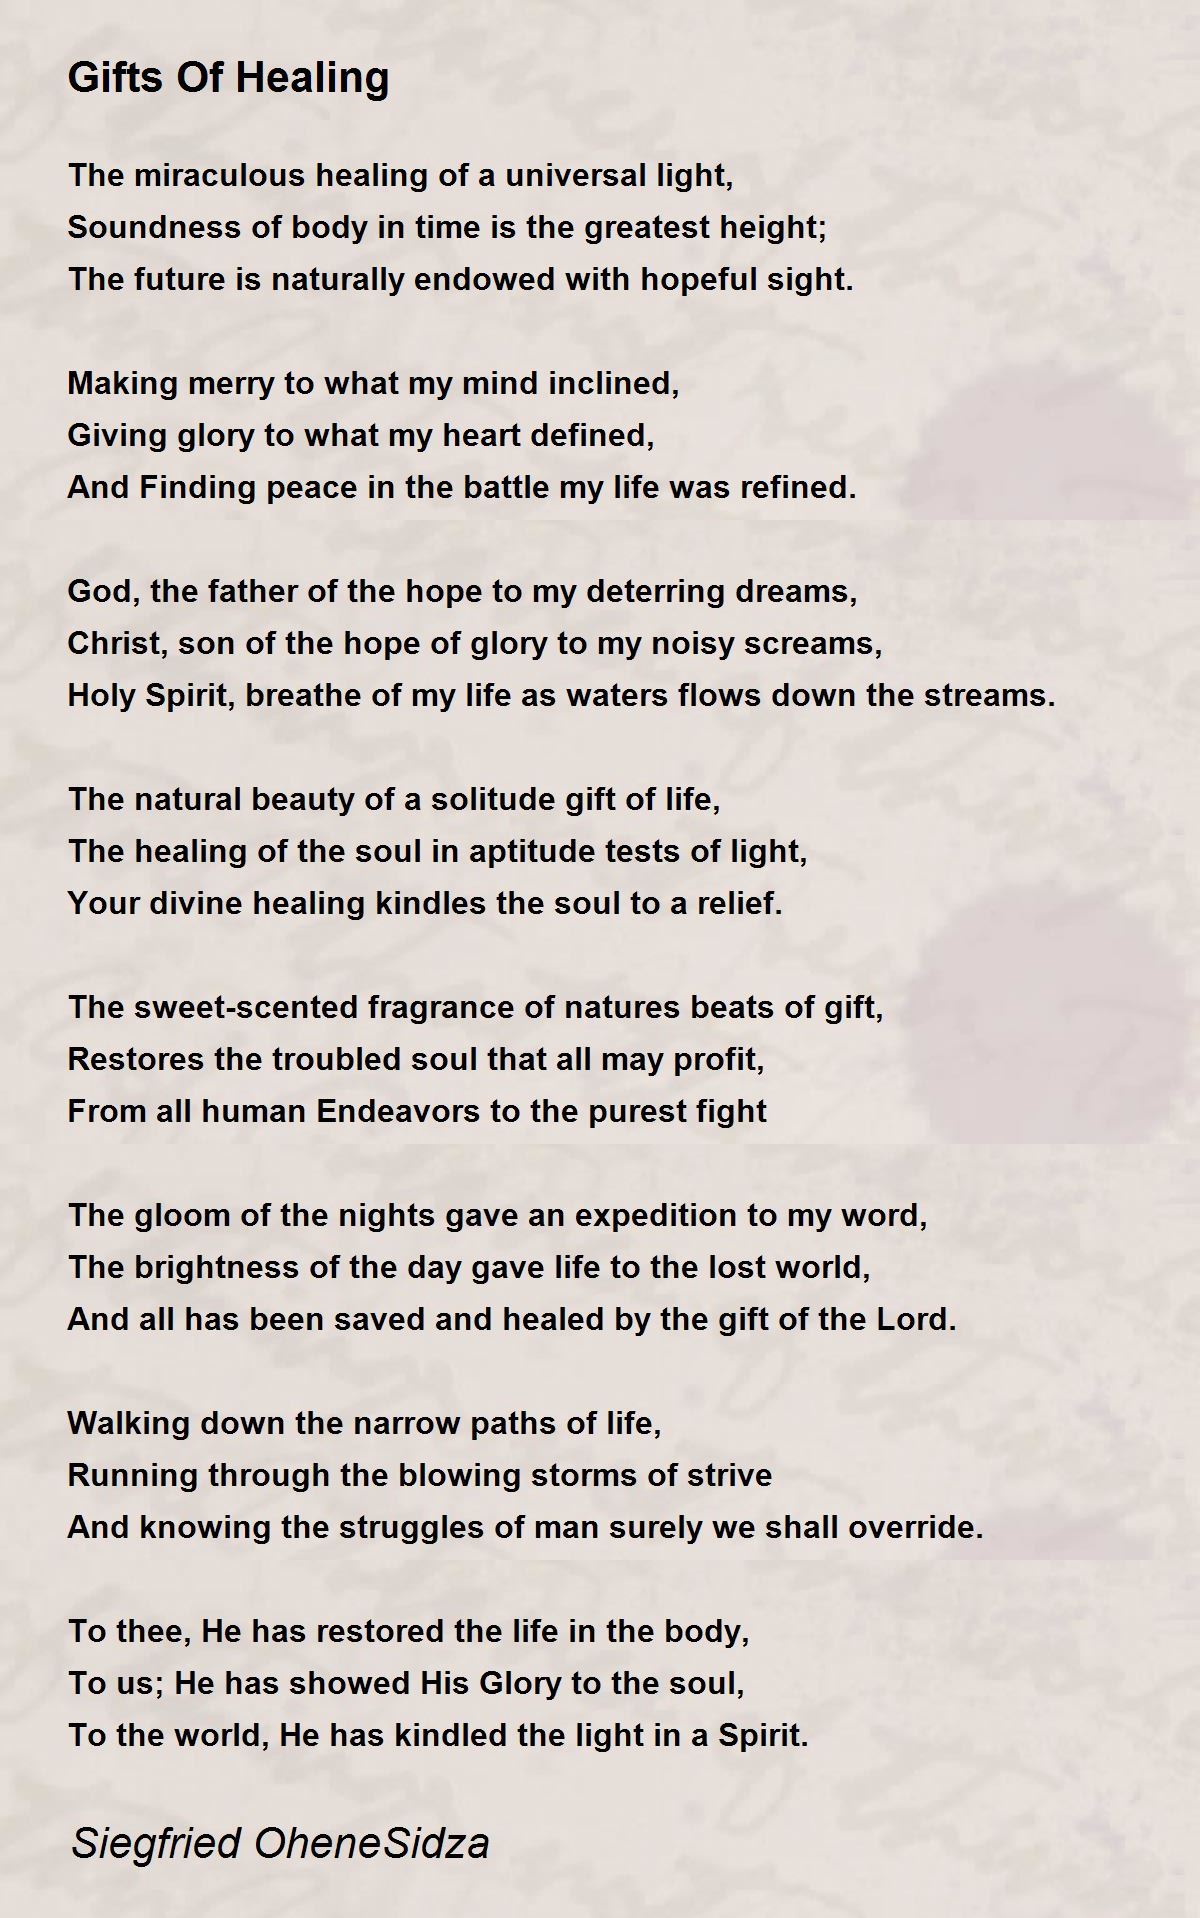 Gifts Of Healing - Gifts Of Healing Poem by Siegfried OheneSidza